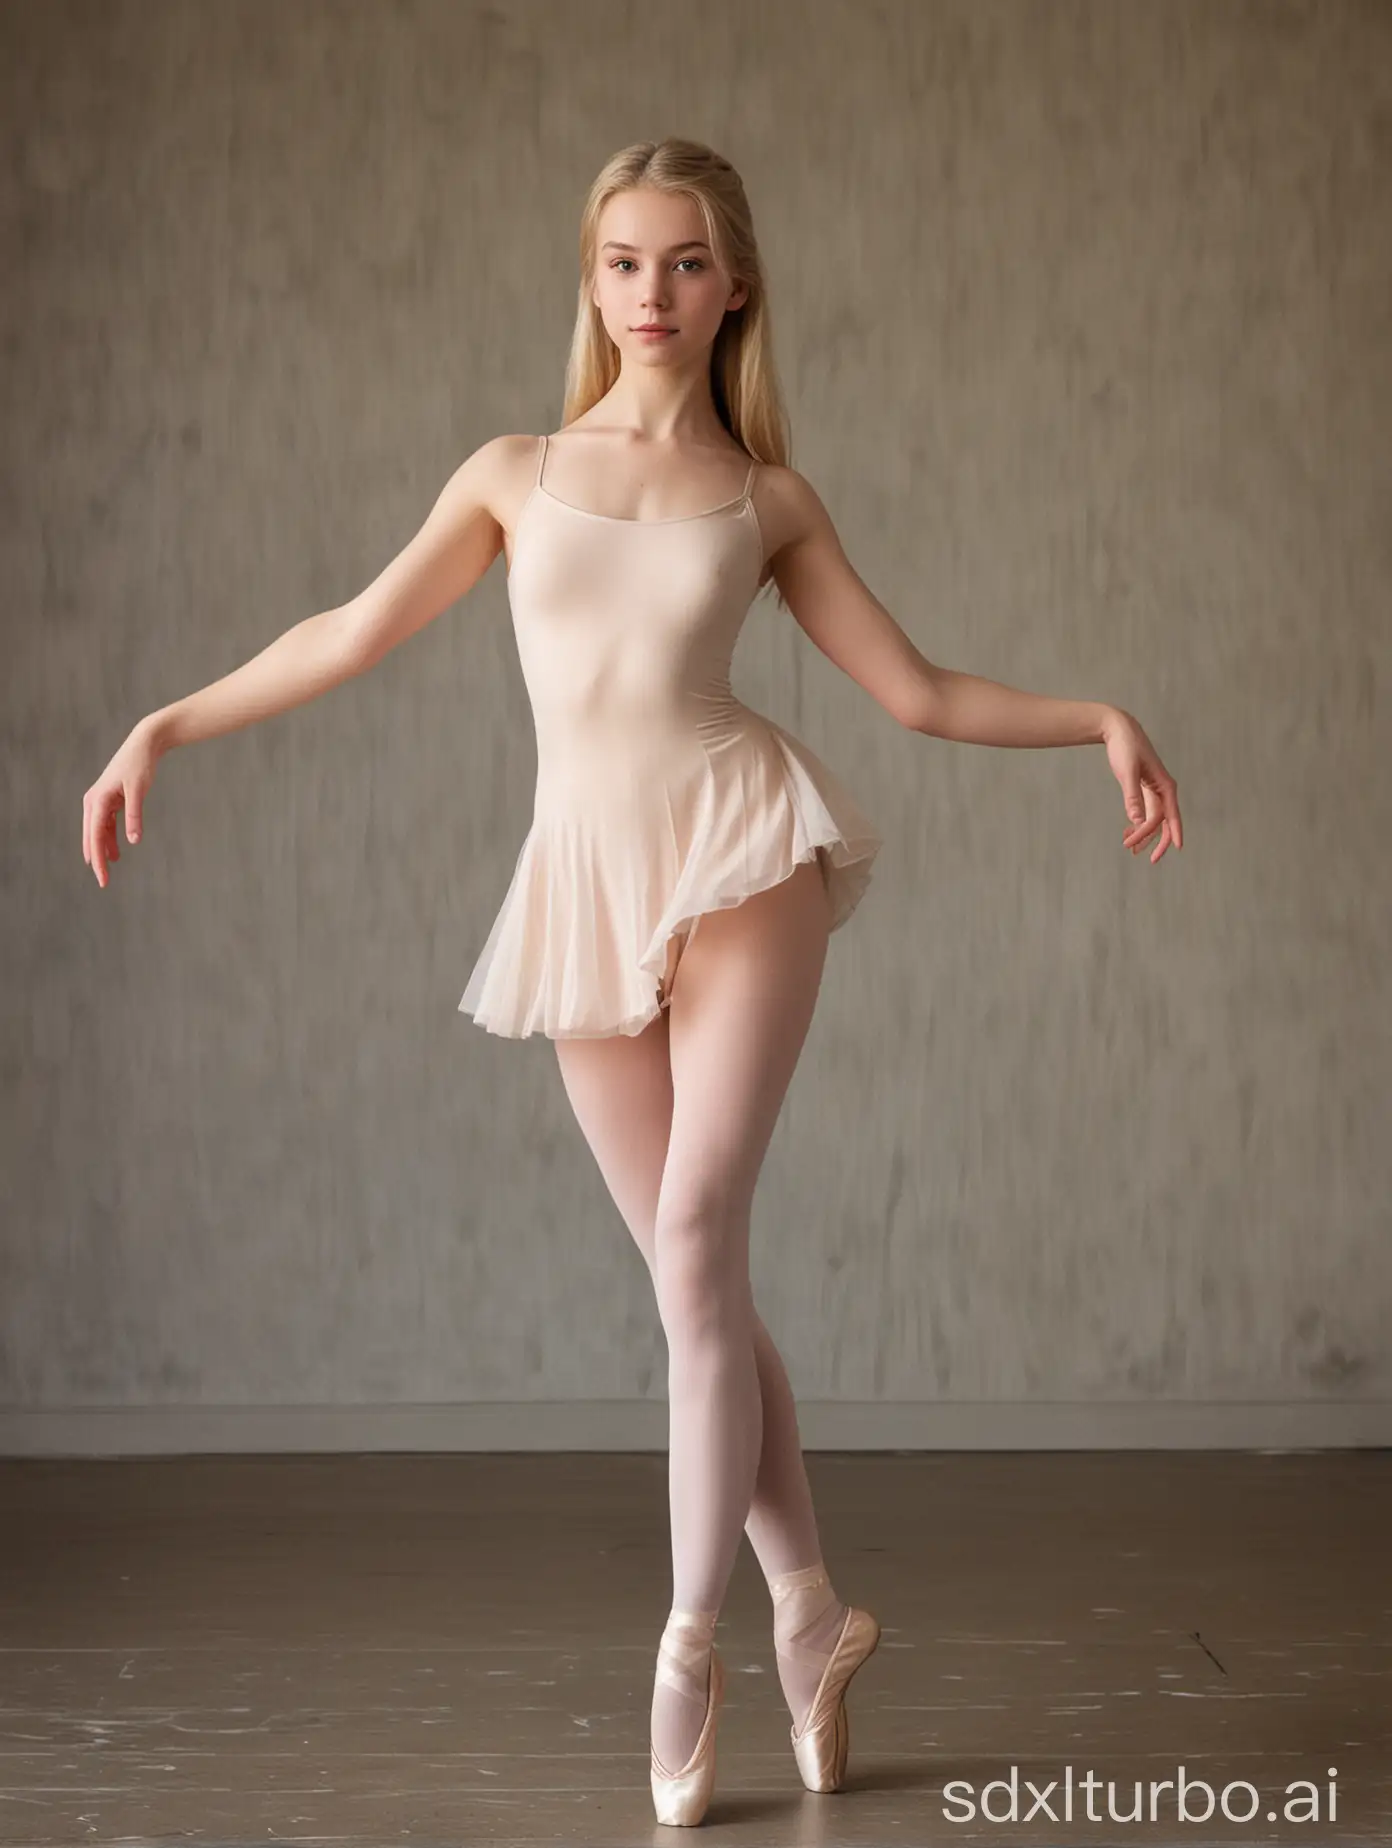 Classical-Ballet-Dancer-Graceful-18YearOld-Blonde-in-Elegant-Pose